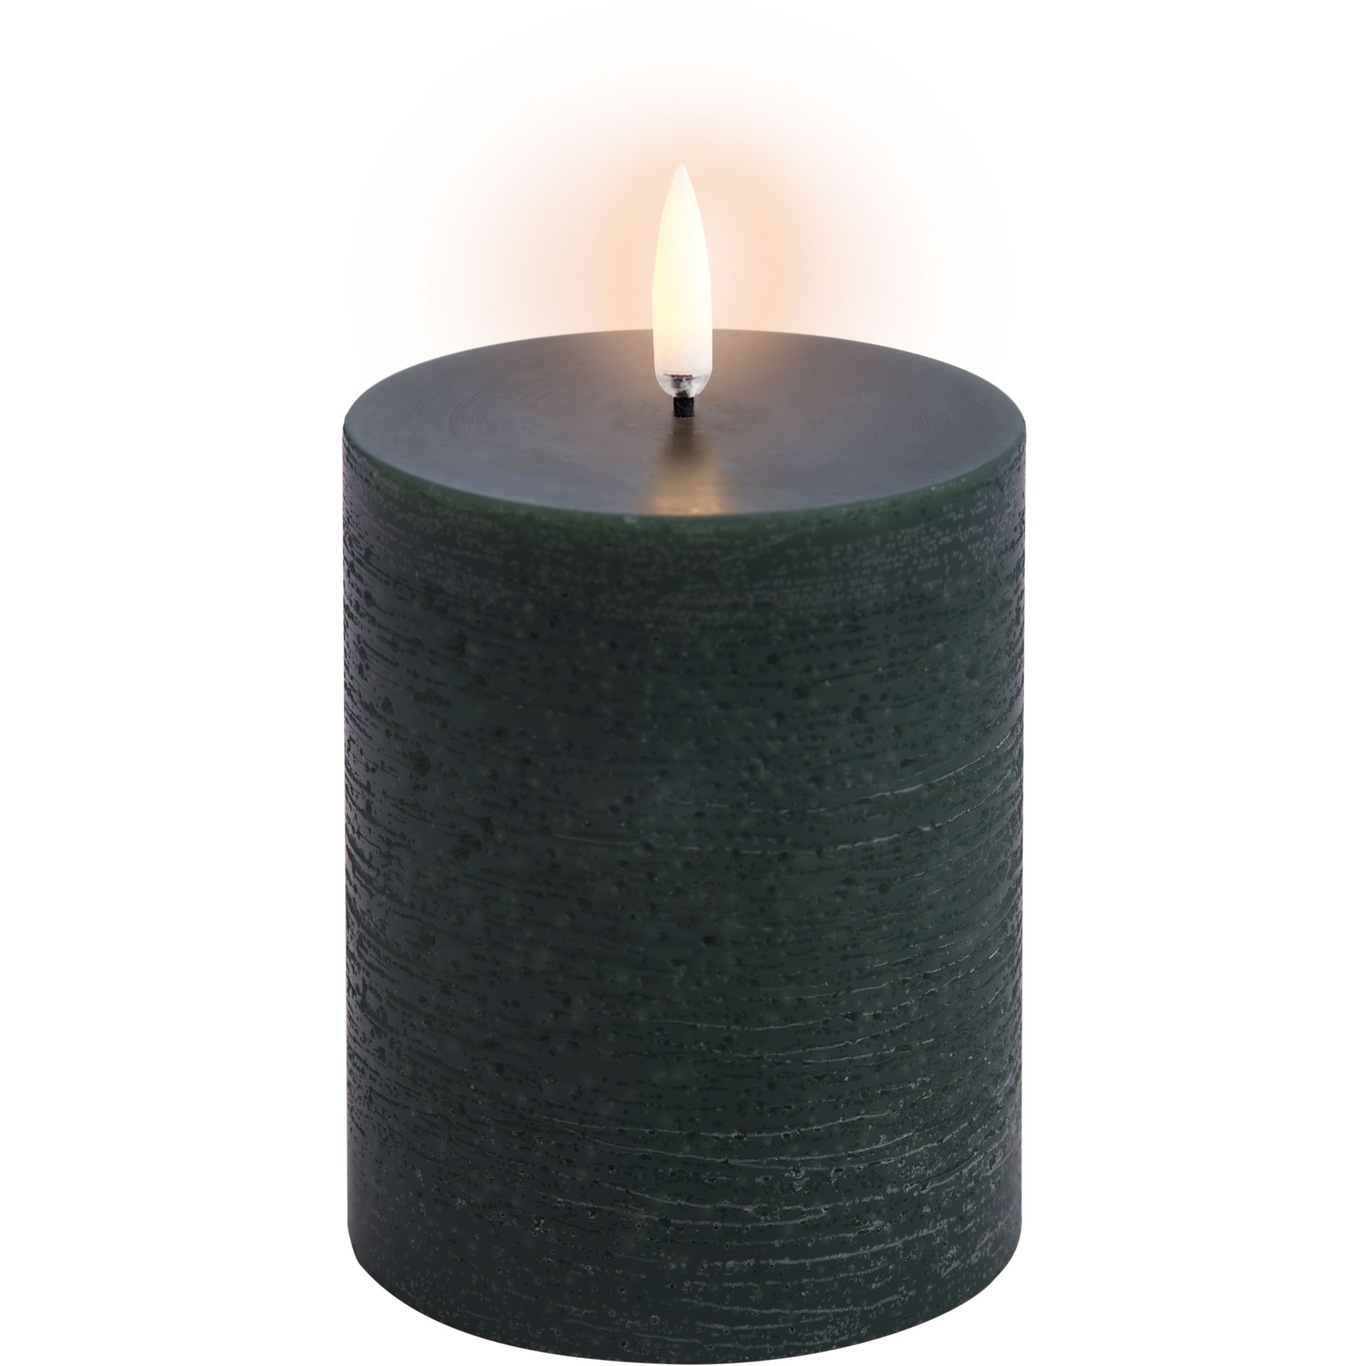 LED Pillar Candle 7,8x10,1 cm, Pine Green